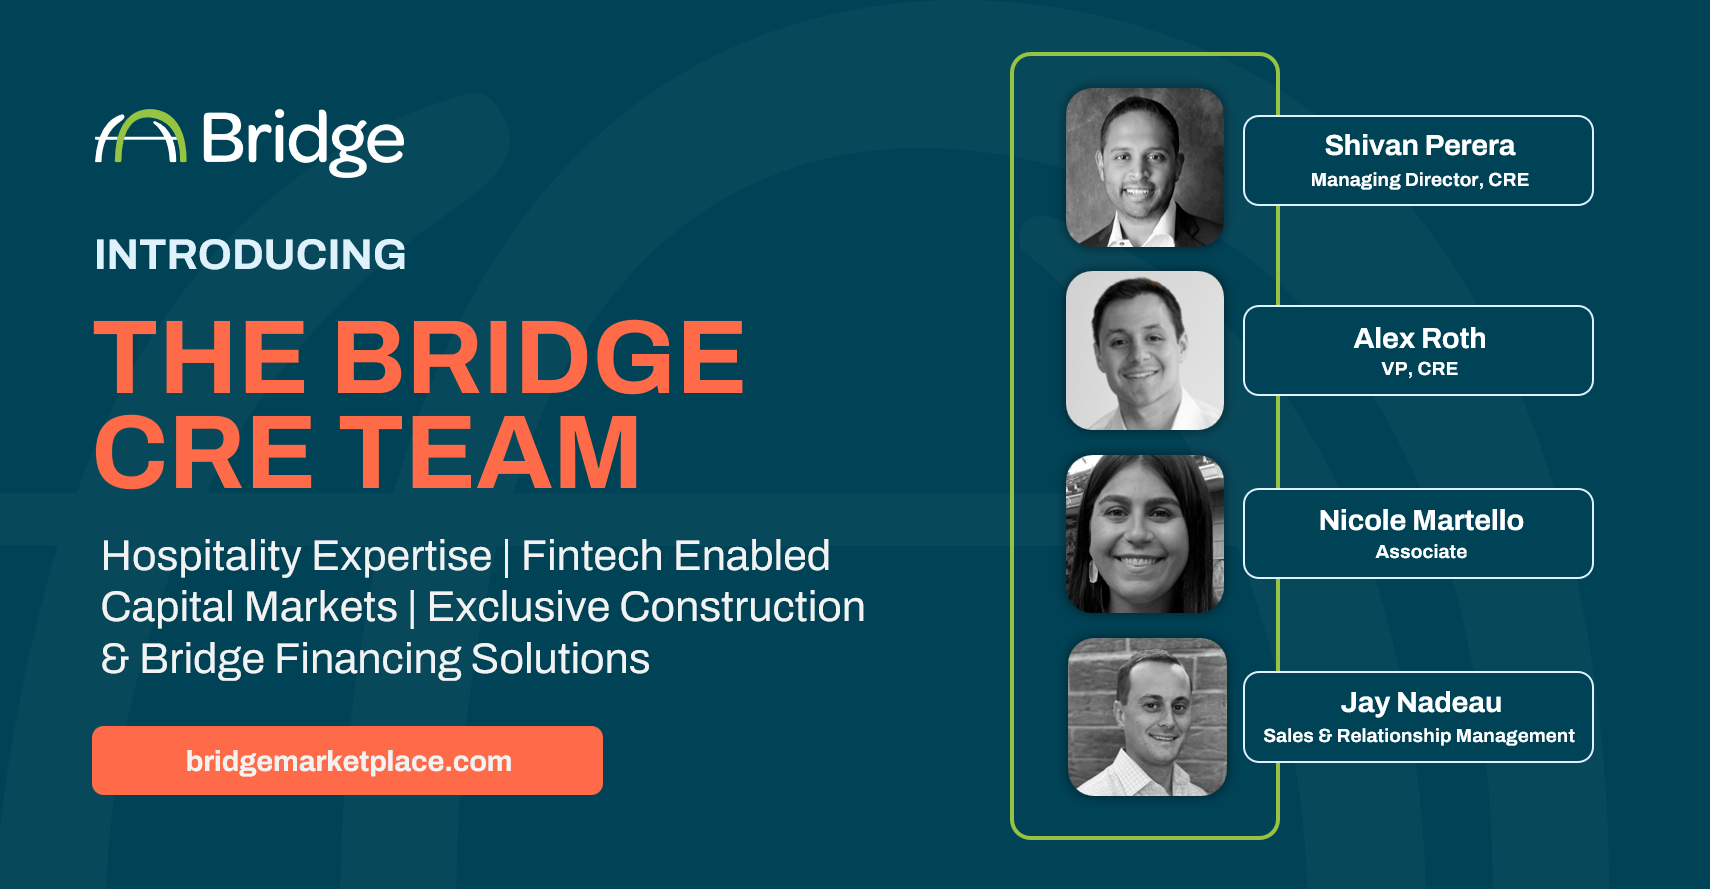 Meet the Bridge CRE Team